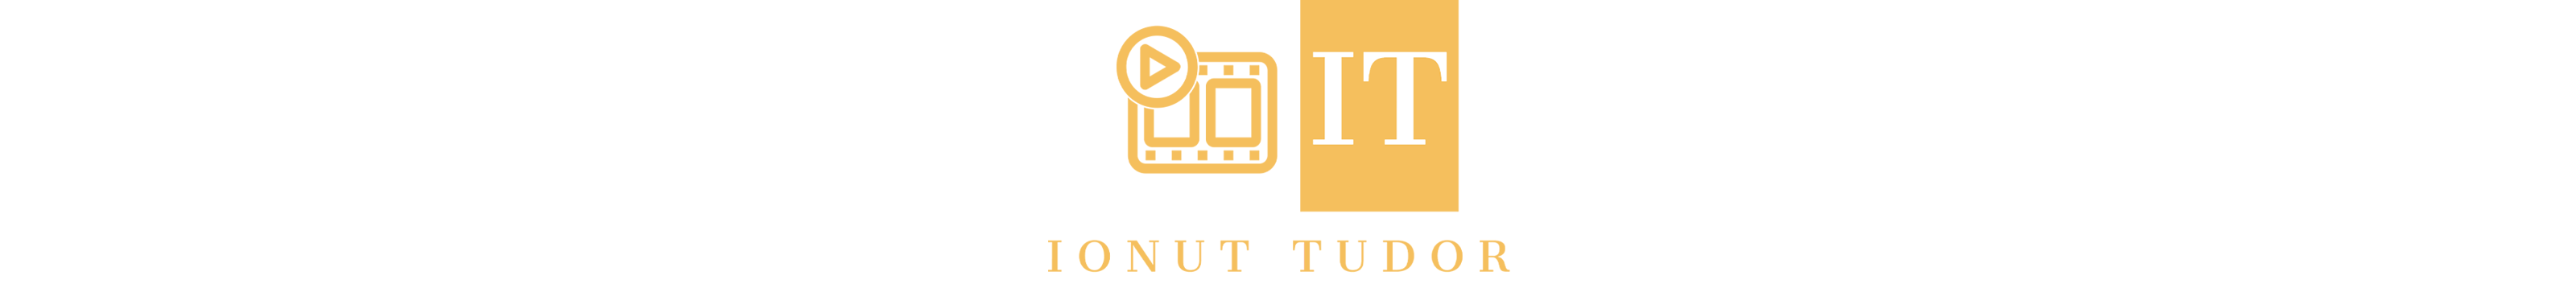 Ionut Tudor's profile banner